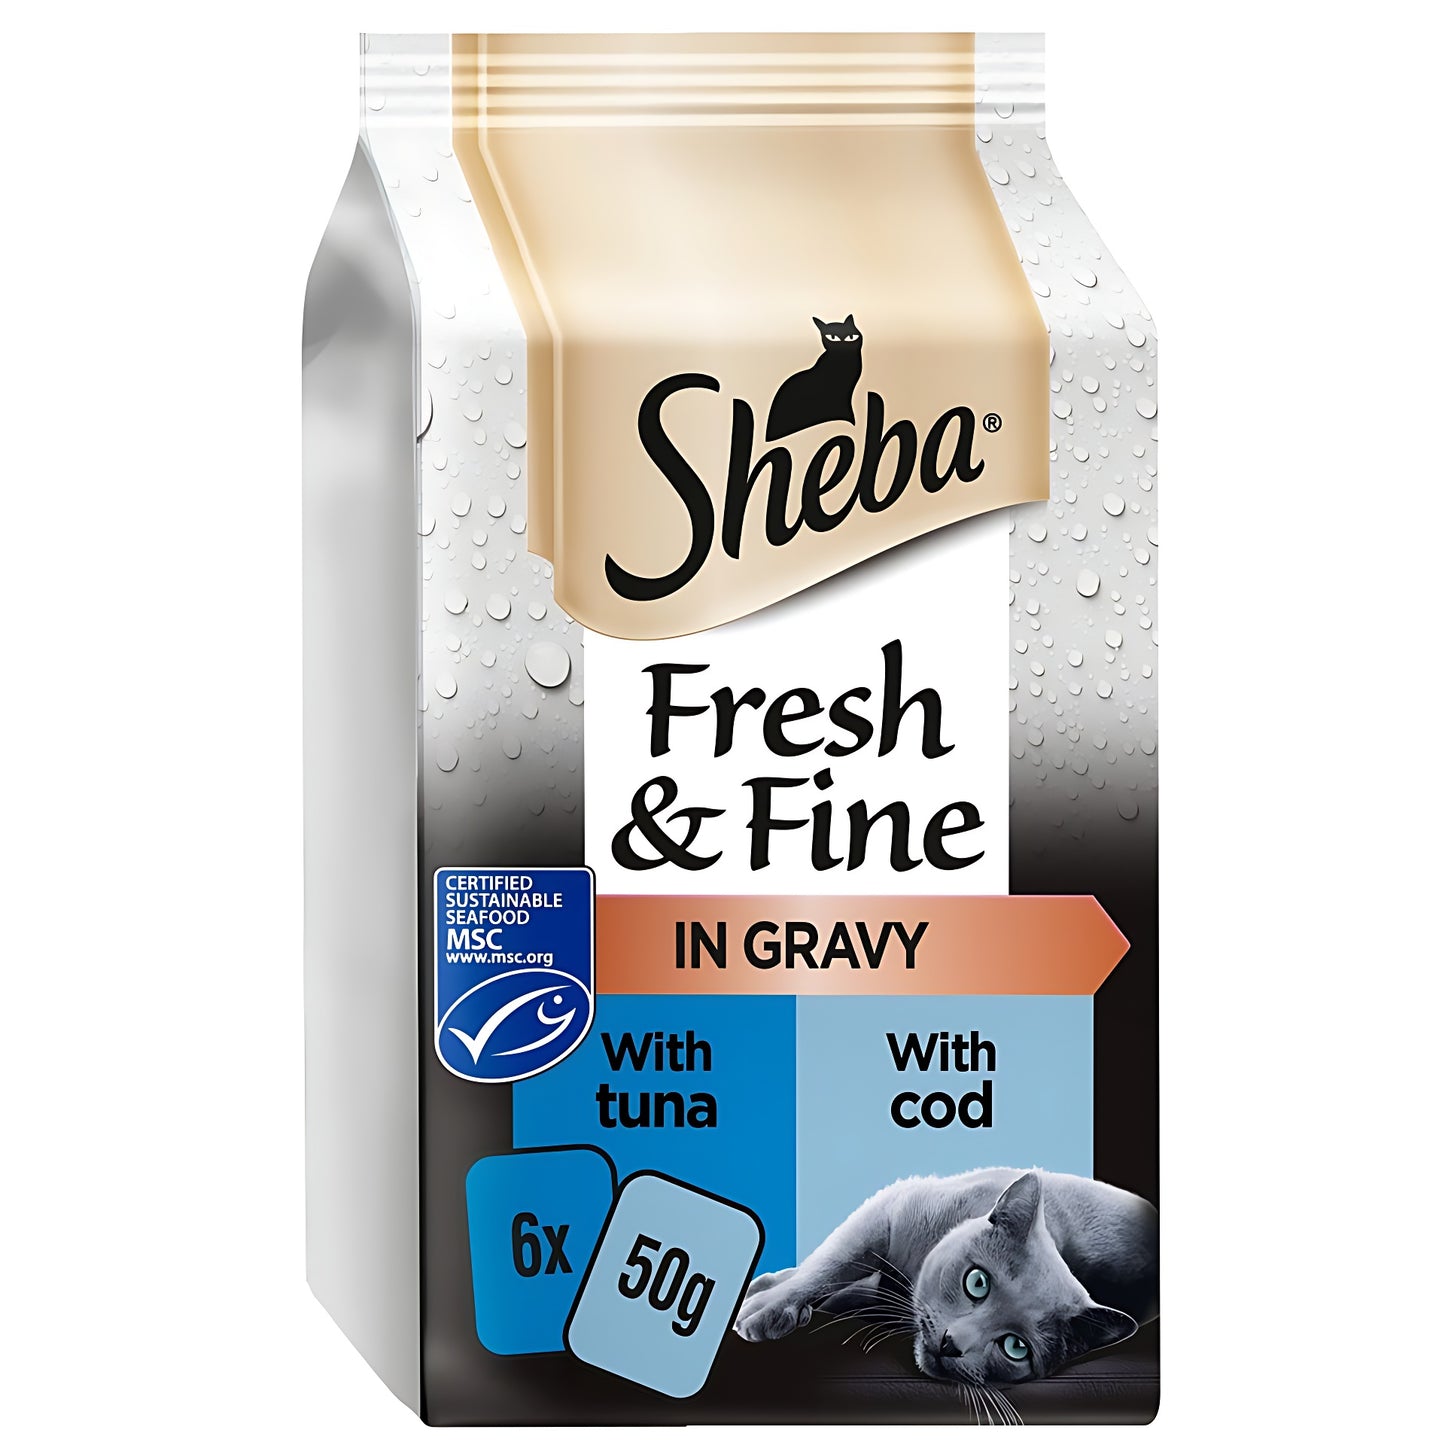 Sheba – Fresh & Fine – In Gravy – With Tuna and Cod – 1 x 6 x 50g